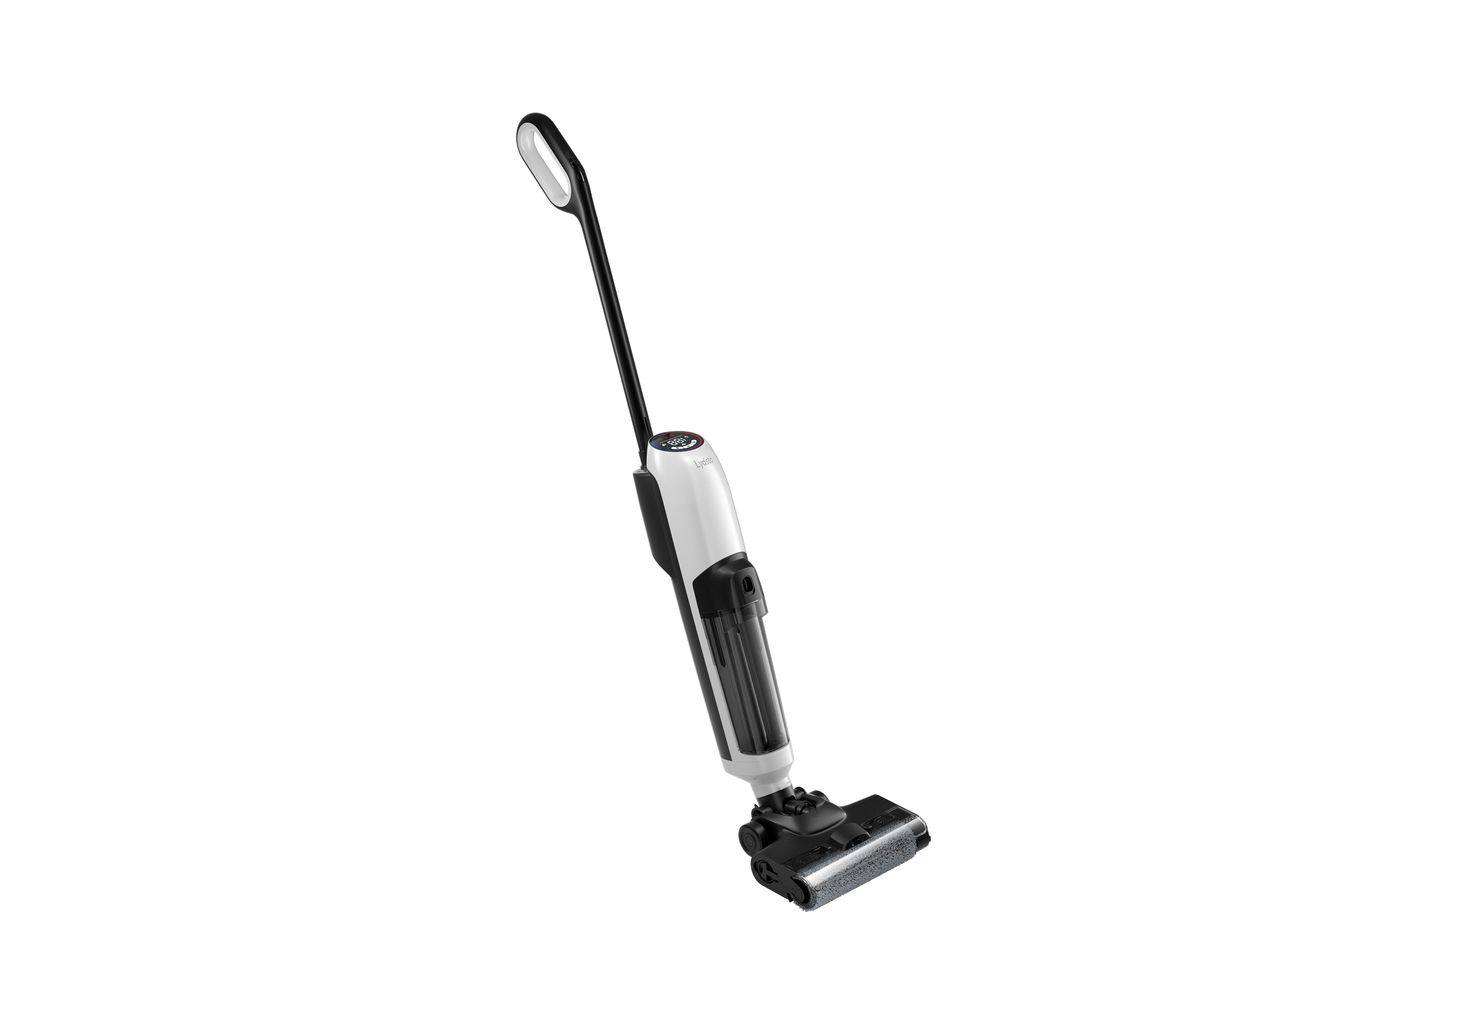 Пылесос Lydsto Handheld Wet And Dry Stick Vacuum Cleaner W1 (YM-W1-W02) в интернет-магазине, главное фото